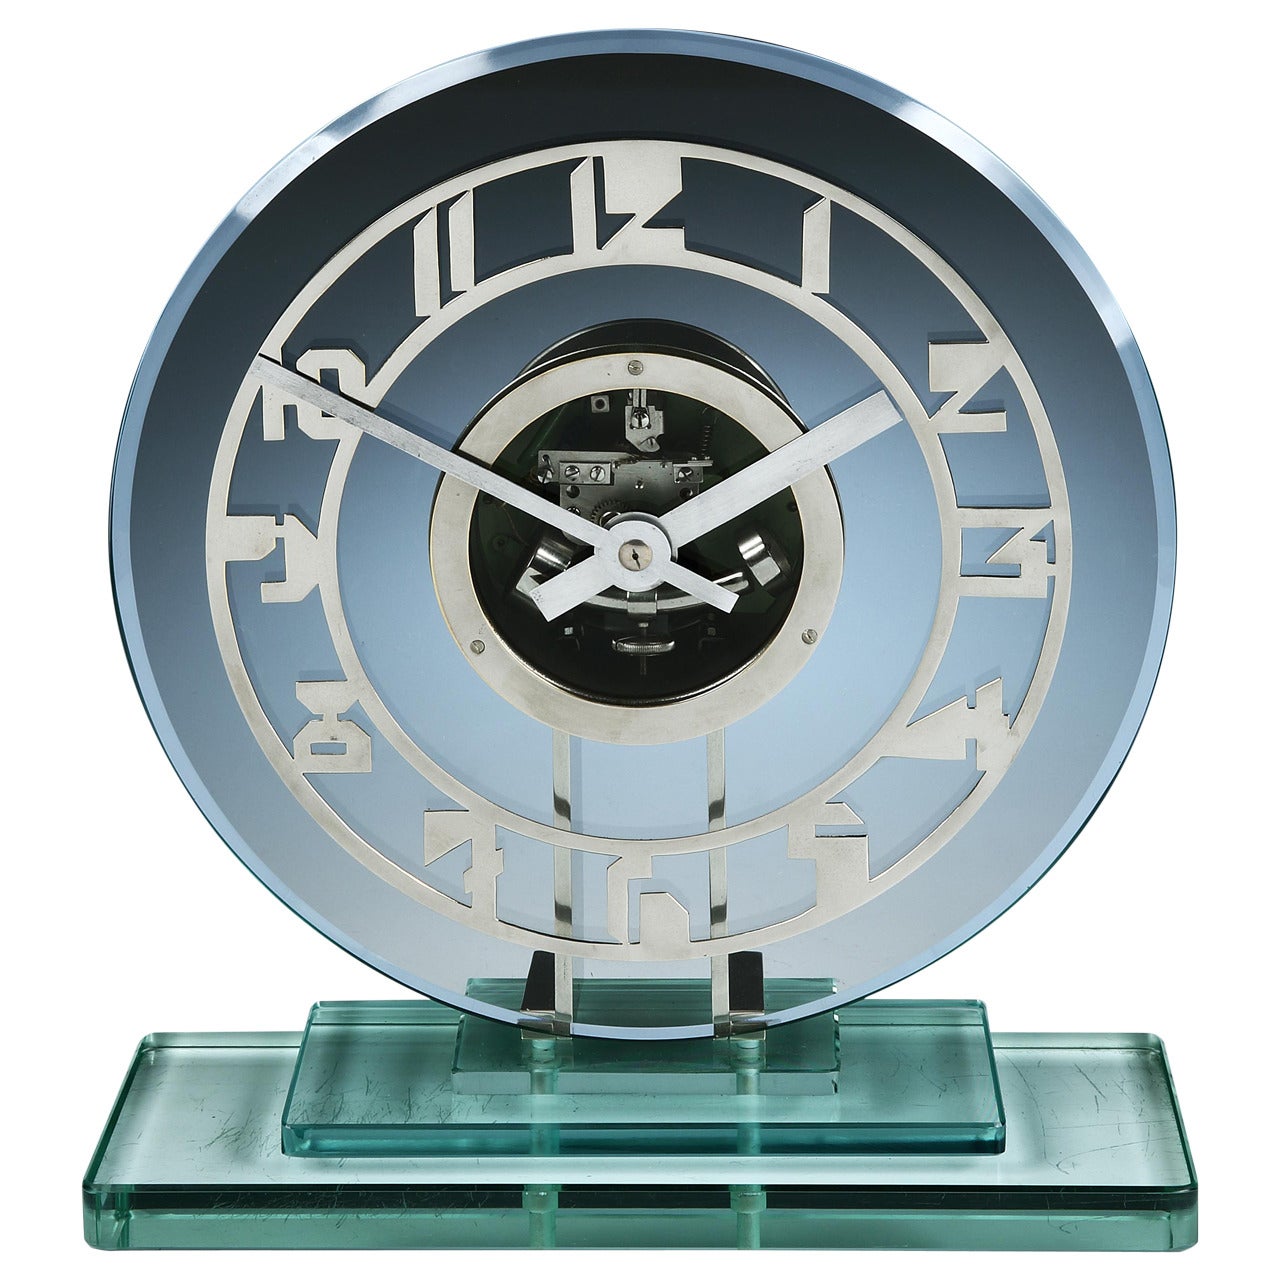 Art Deco 'Skeleton' clock by ATO